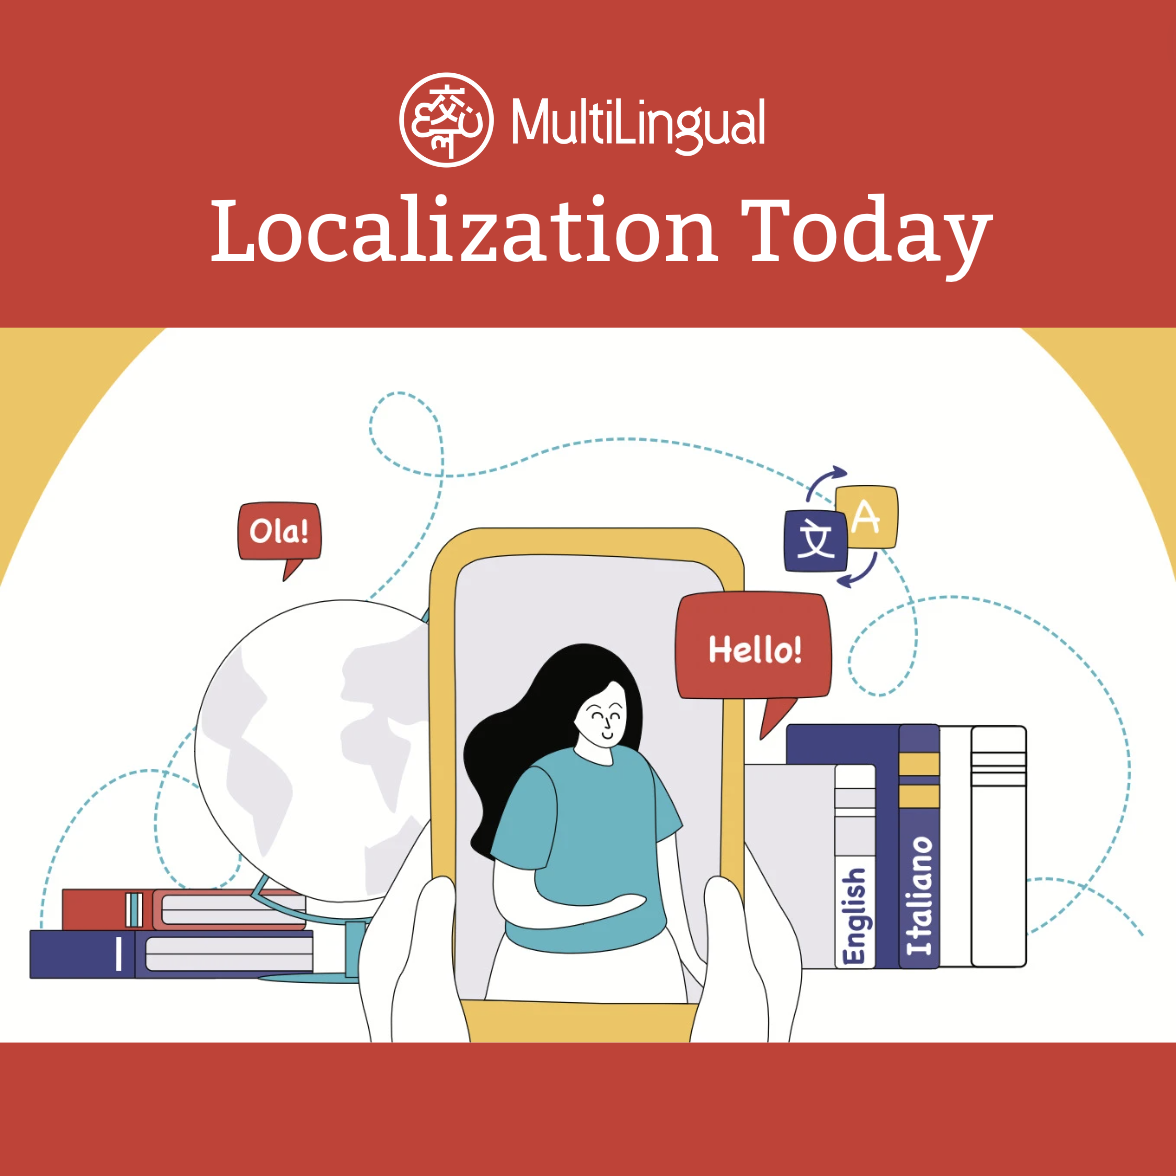 Nine strategies for multilingual eLearning success